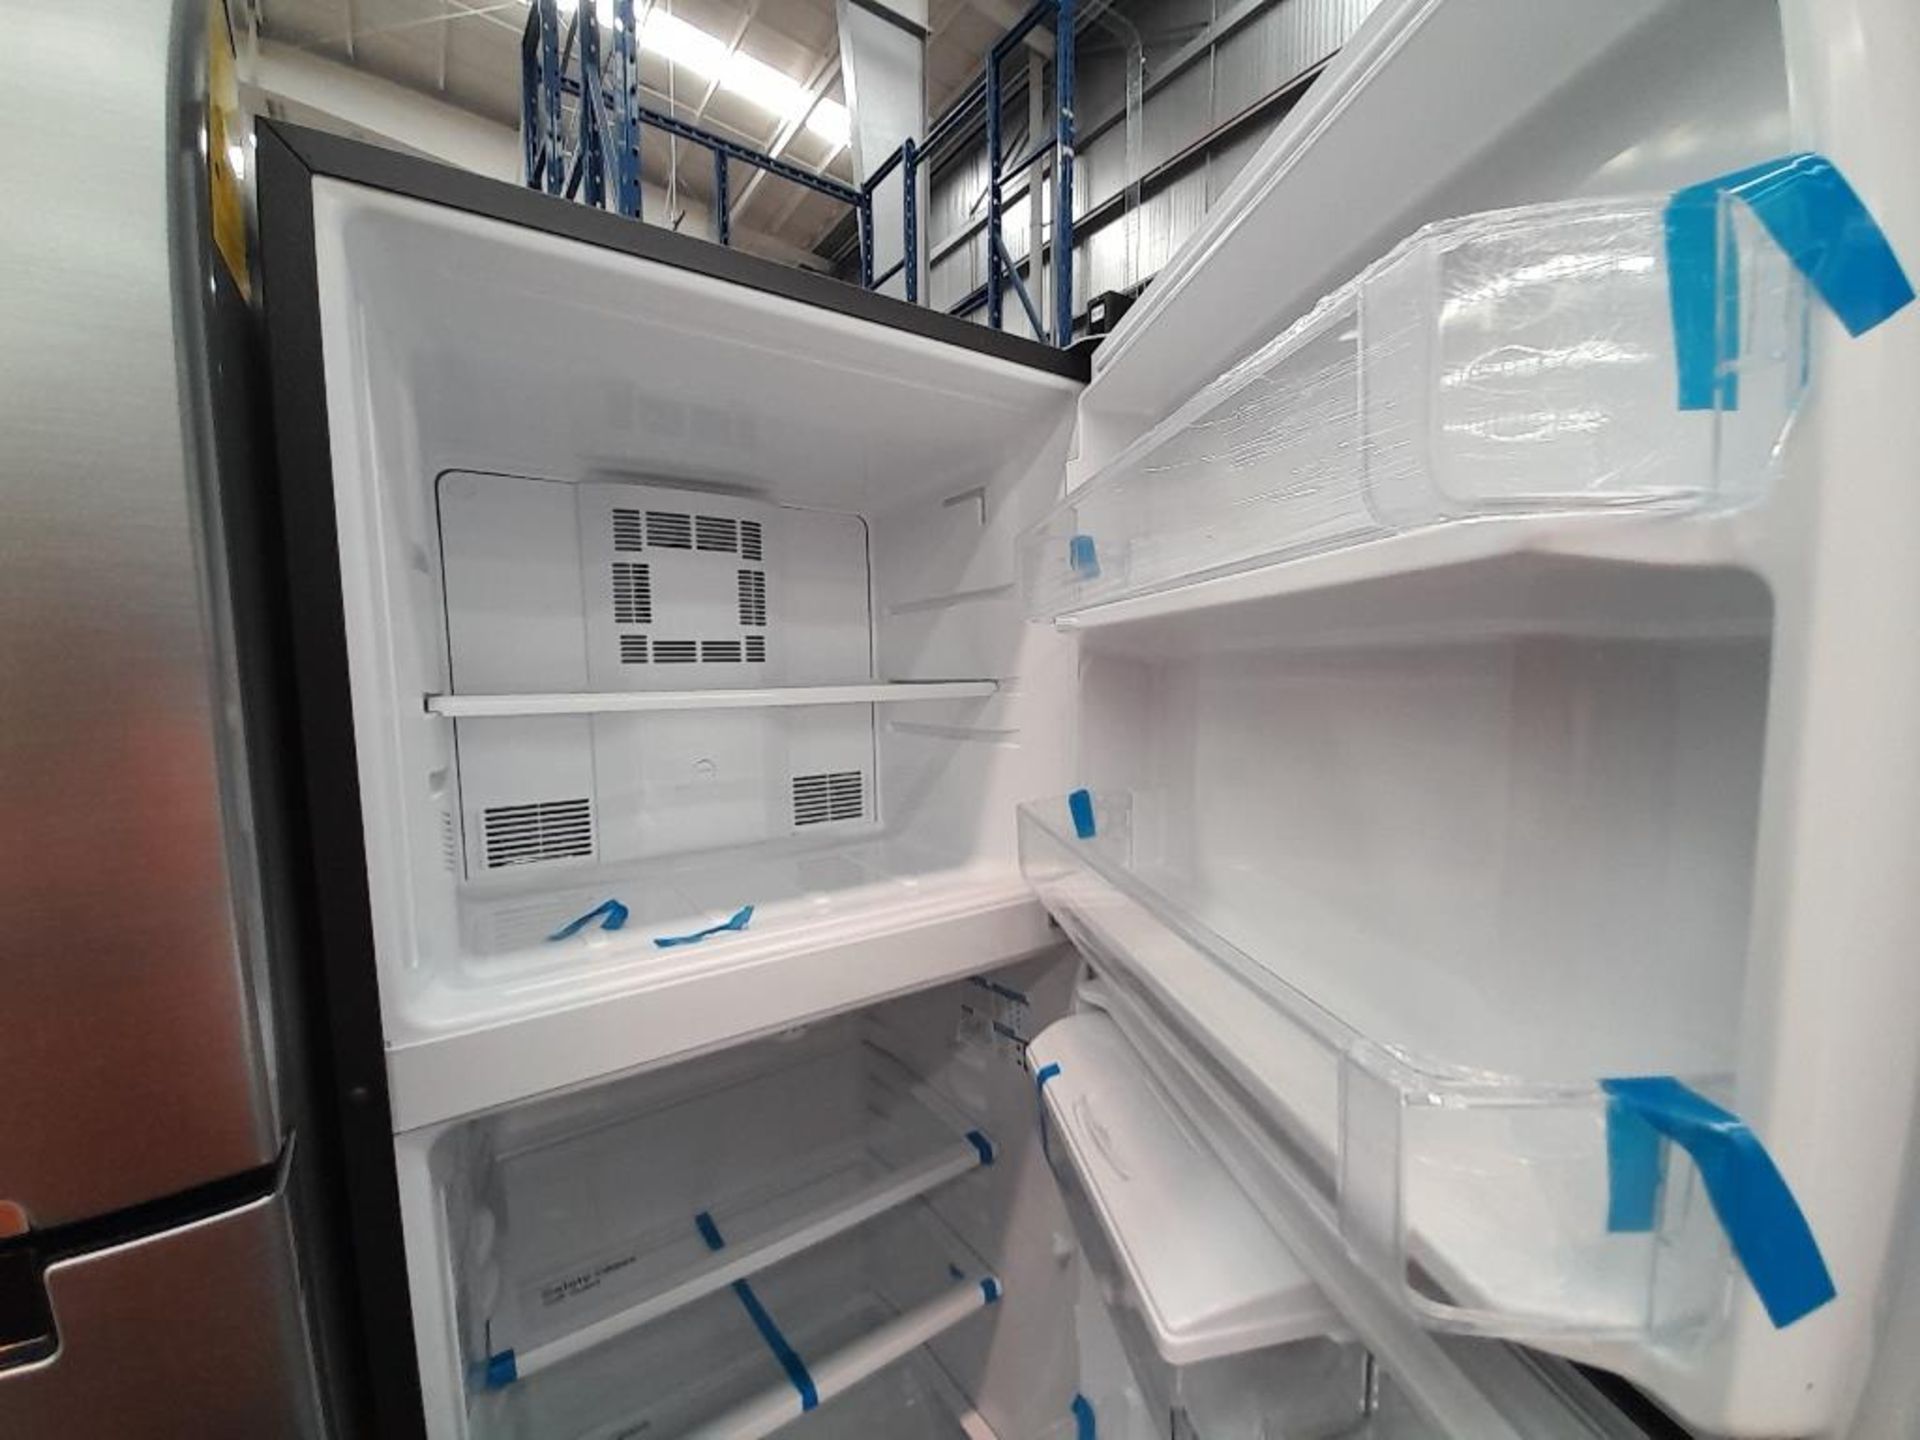 Lote de 1 Refrigerador con dispensador de agua Marca MABE, Modelo RME360FD, Serie 812552, Color - Image 4 of 6